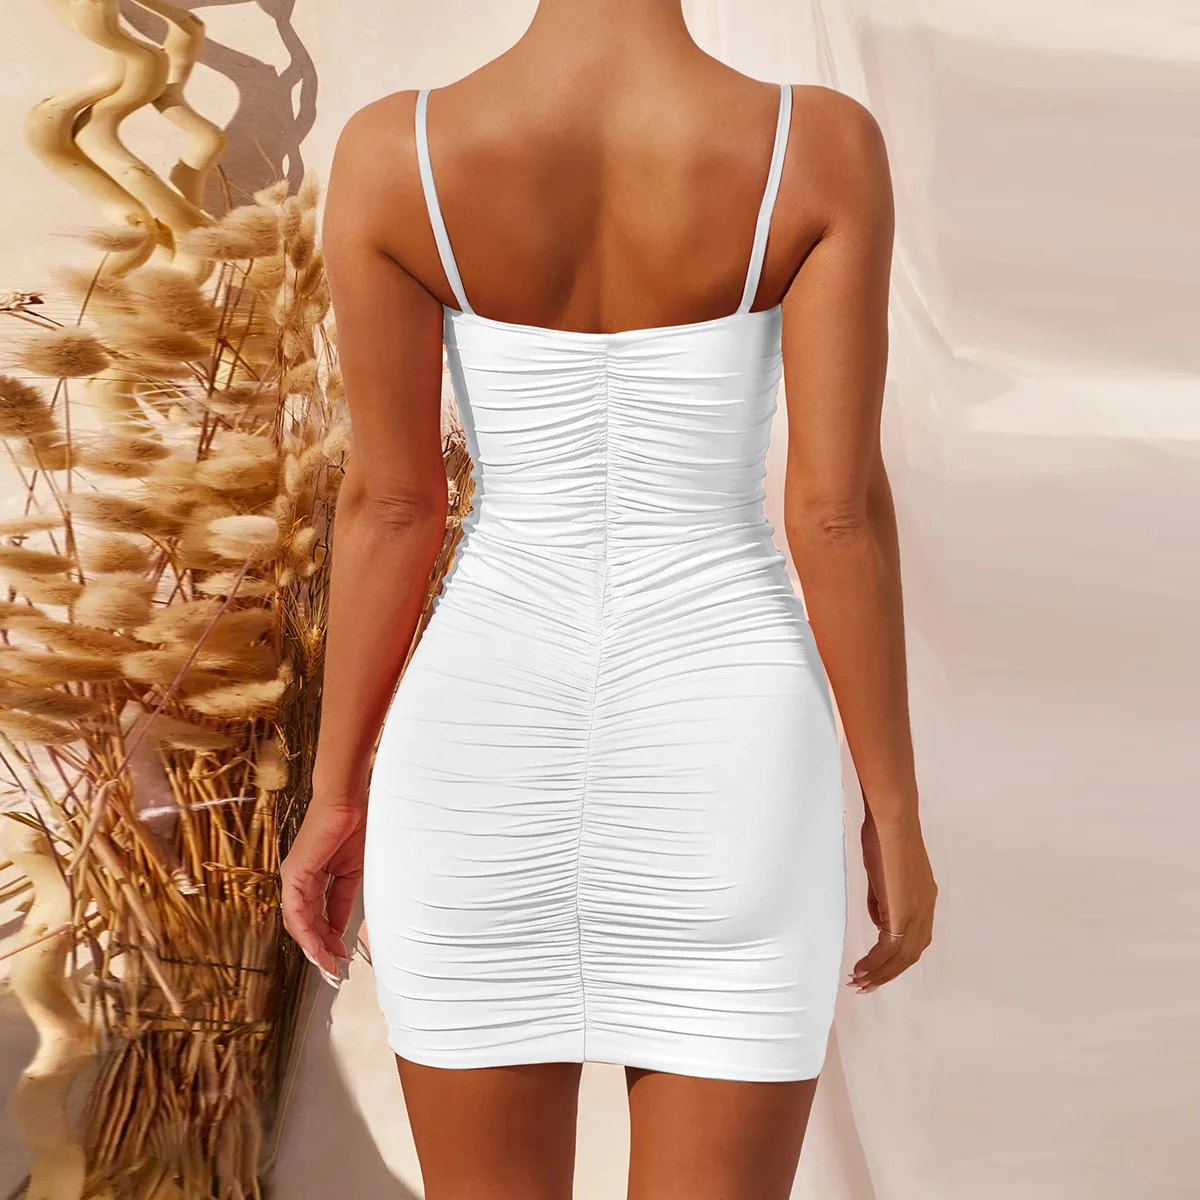 KOLLSEEY Brand Hot Sale Elastic Fitness Fashion Solid White Skinny Bodycon Mini Dresses Rib Knit Sleeveless V-neck Women Dress enlarge